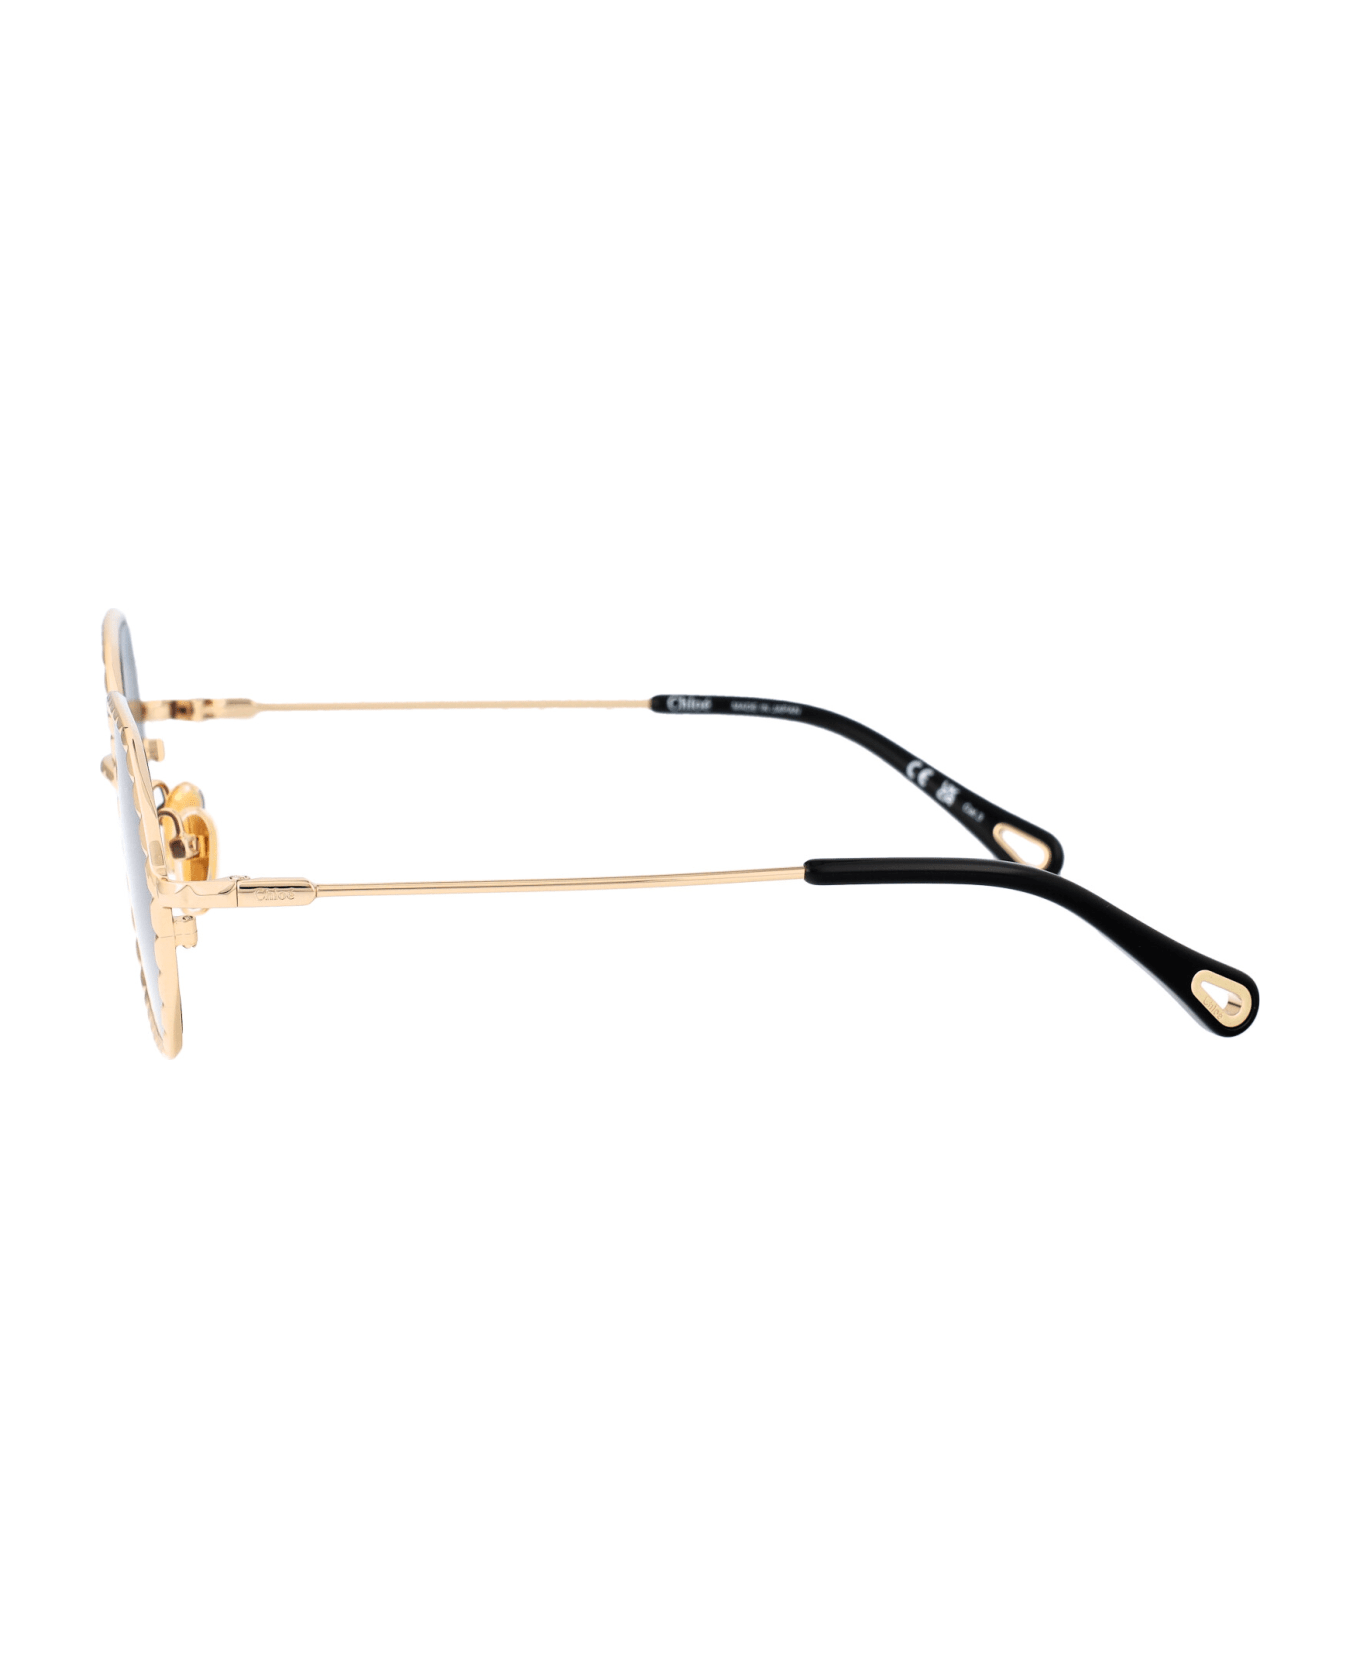 Chloé Eyewear Ch0231s Sunglasses - 001 GOLD GOLD GREY